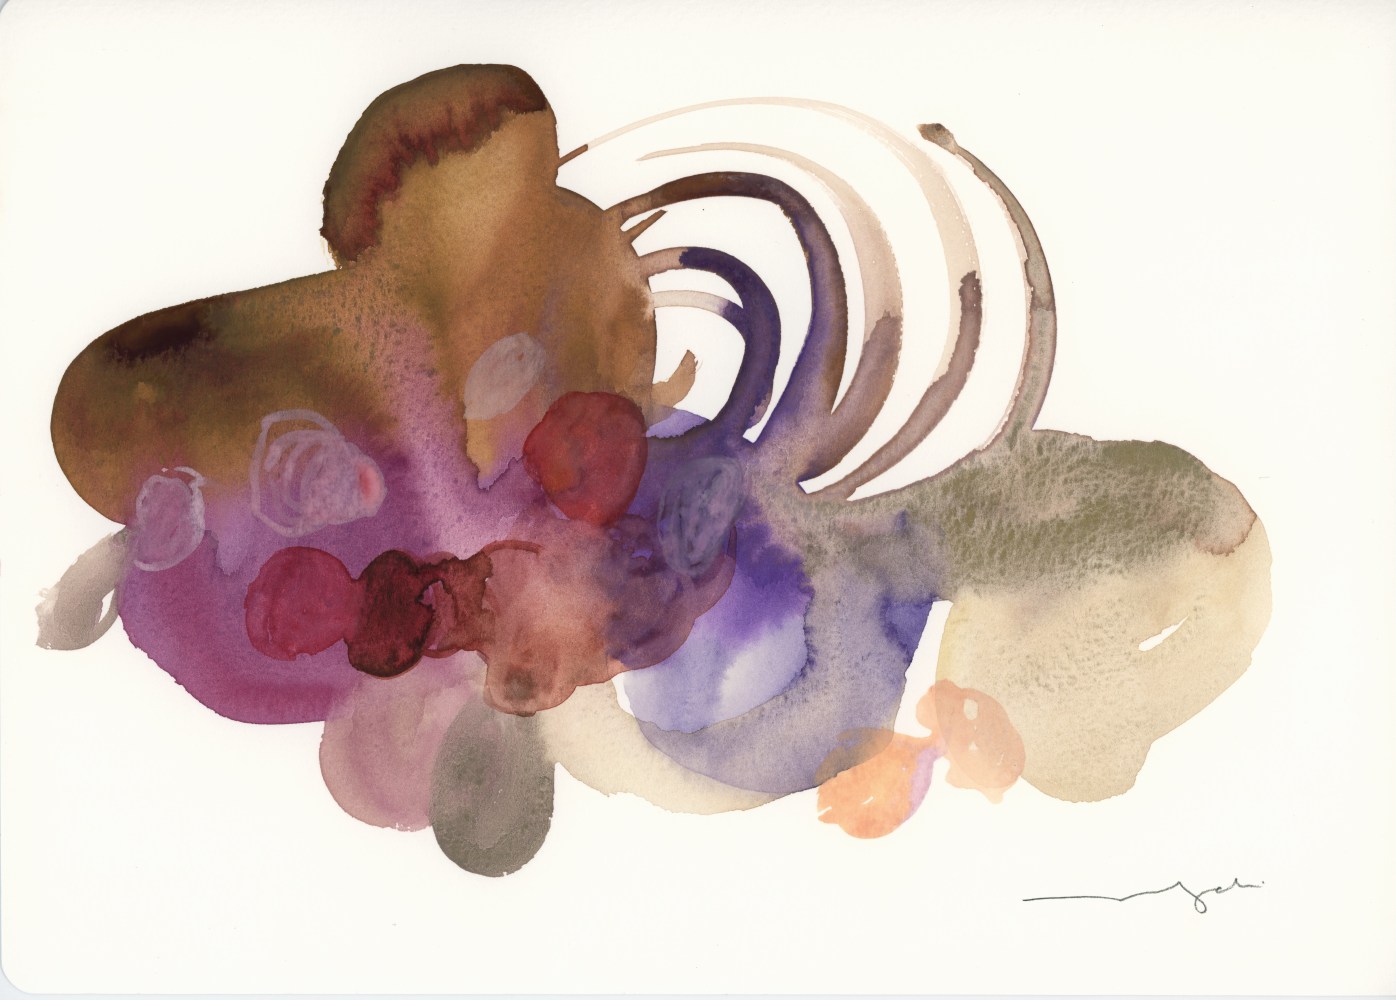 Magali Lara

Sin t&amp;iacute;tulo de la serie Melancol&amp;iacute;a, 2012

Watercolor on cotton paper

21 X 29.3 cm
8 17/64 x 11 17/32 in

Unique